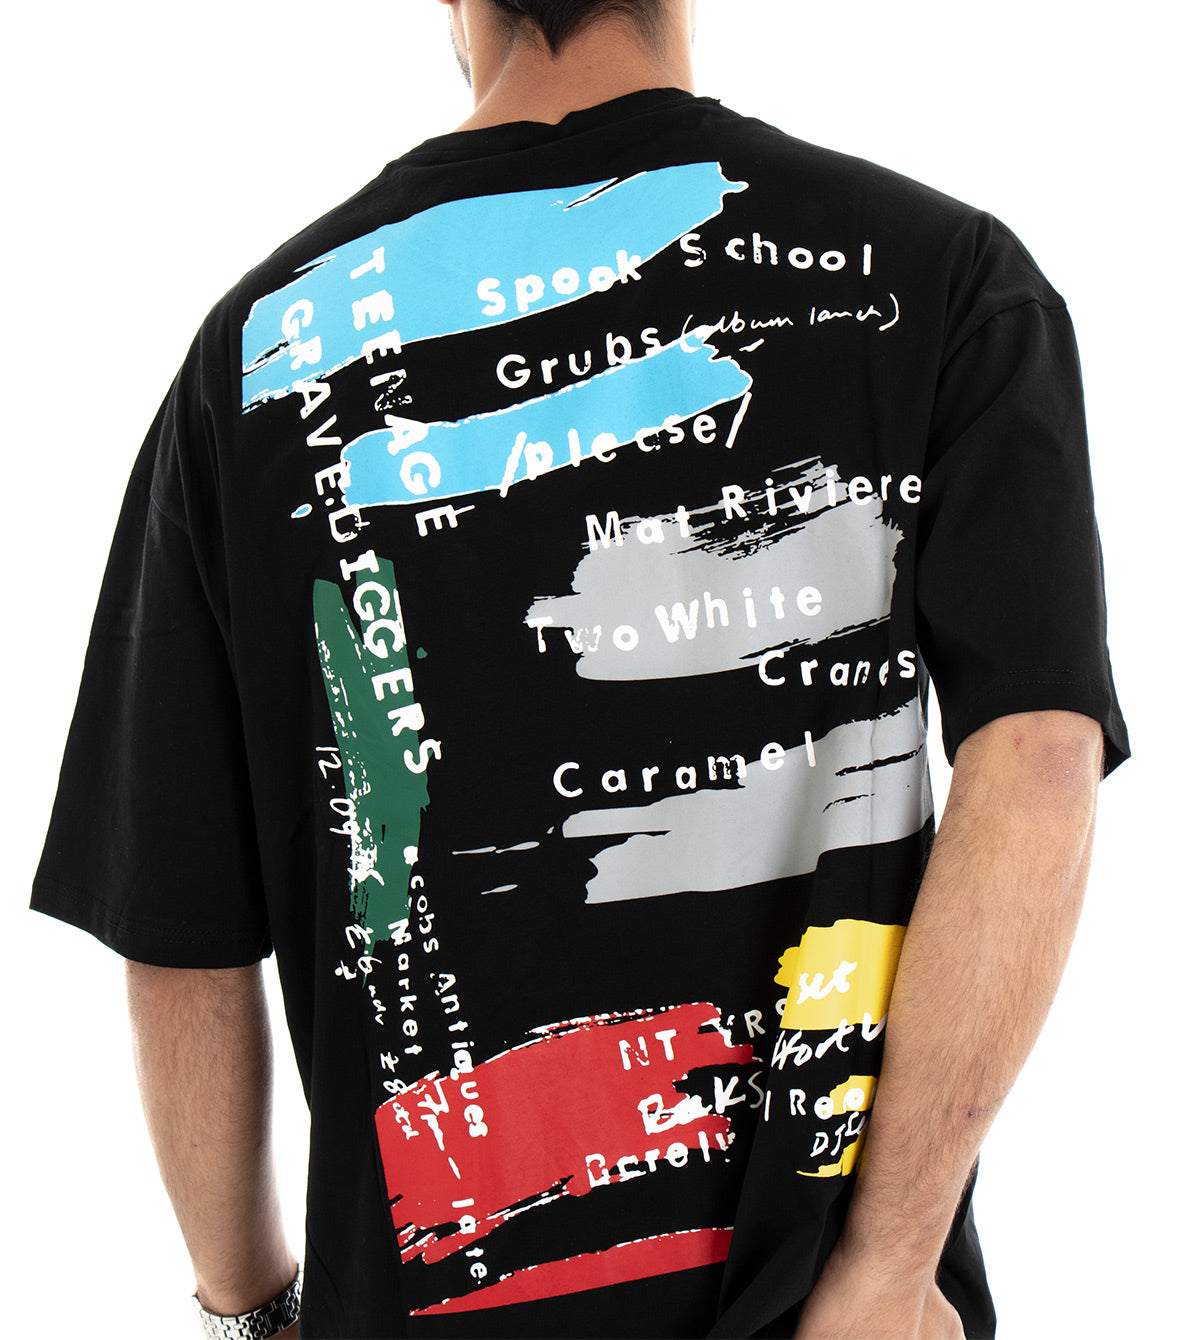 Men's T-shirt Short Sleeve Shirt Retro Print Over Size Black GIOSAL